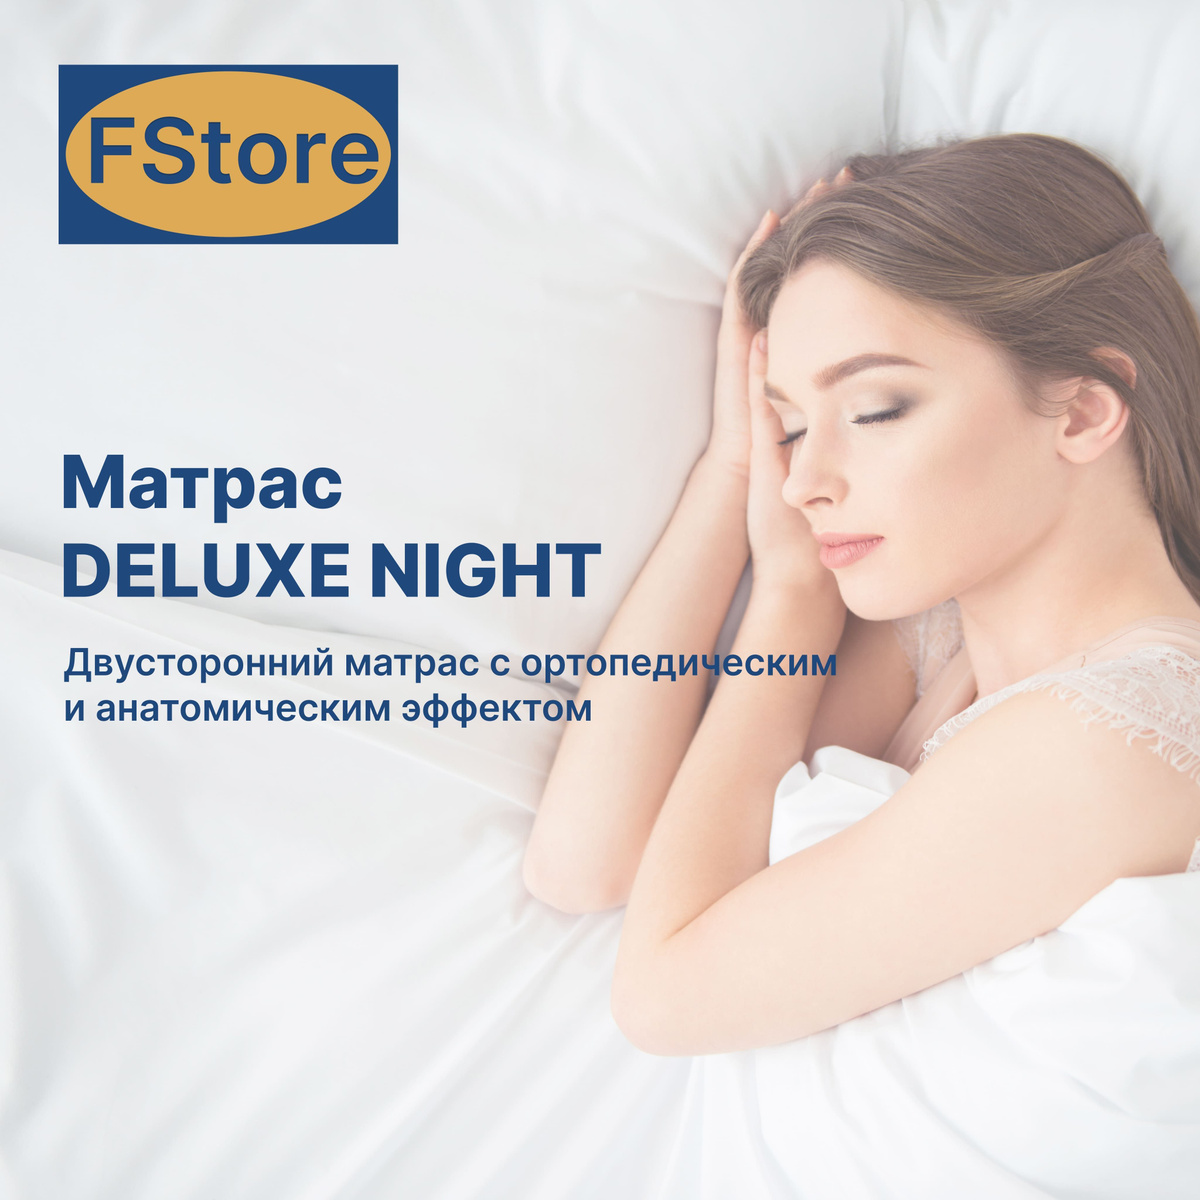 Матрас FStore Deluxe Night